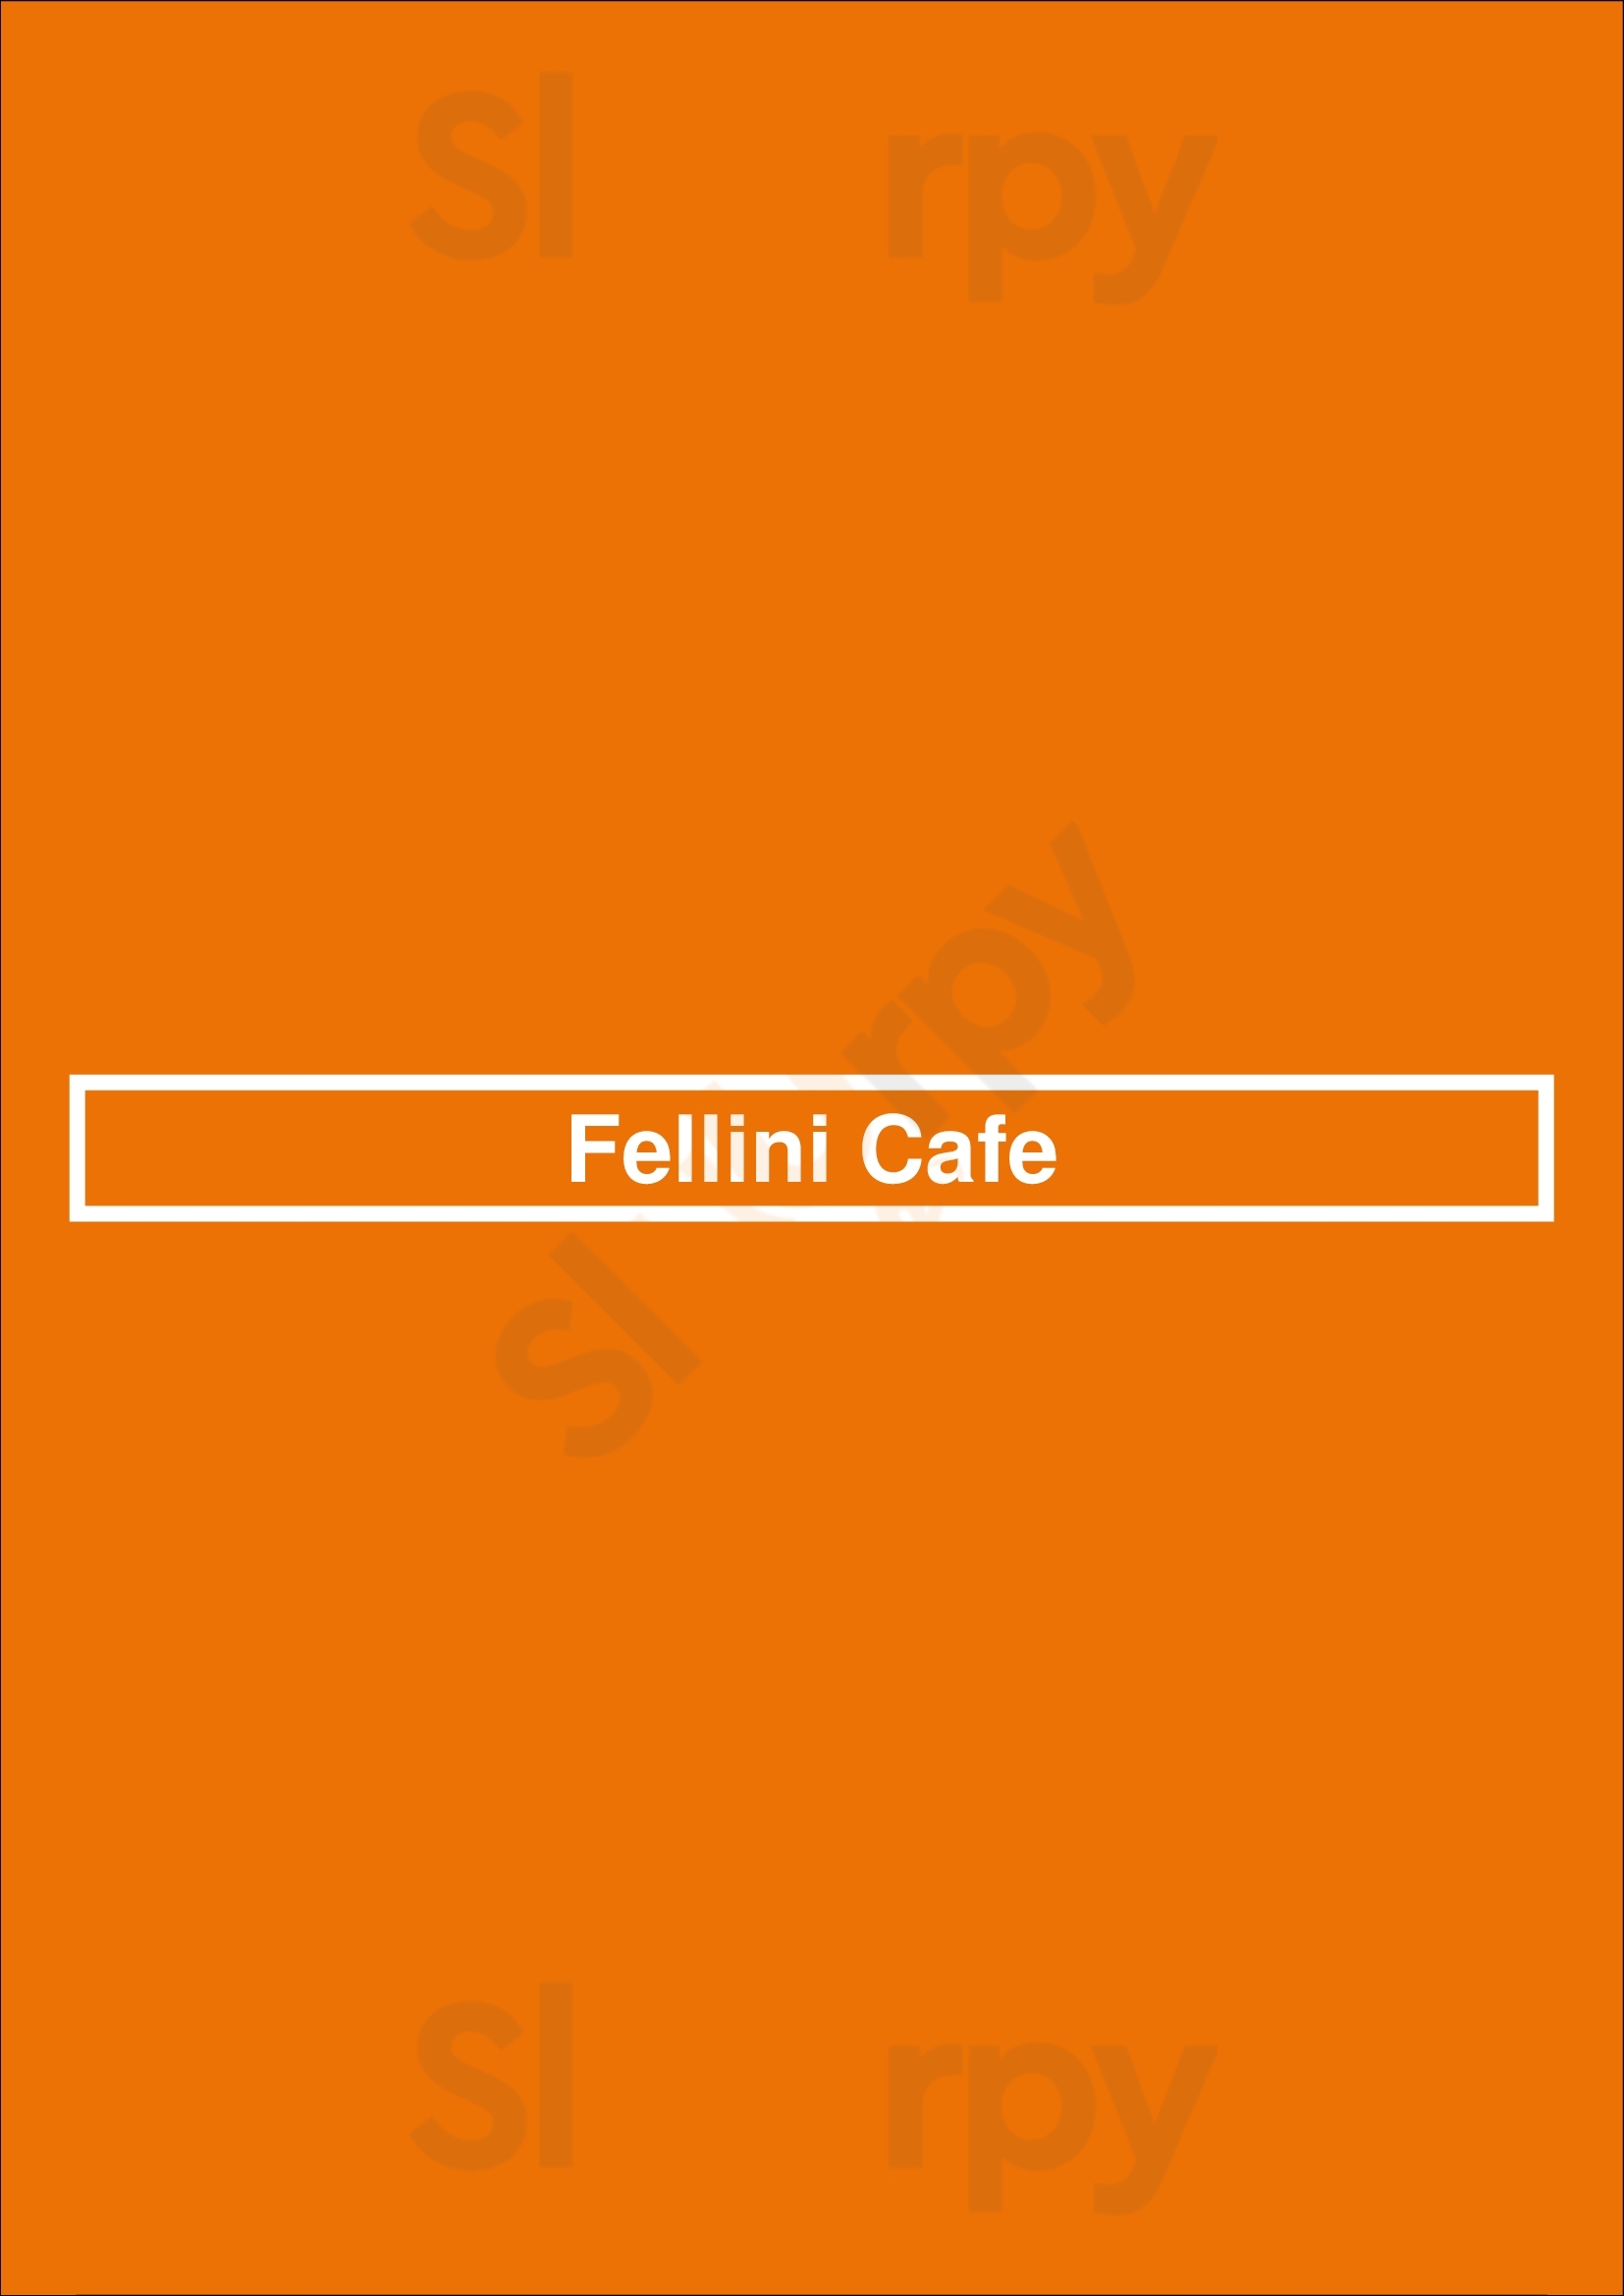 Fellini Cafe West Chester Menu - 1